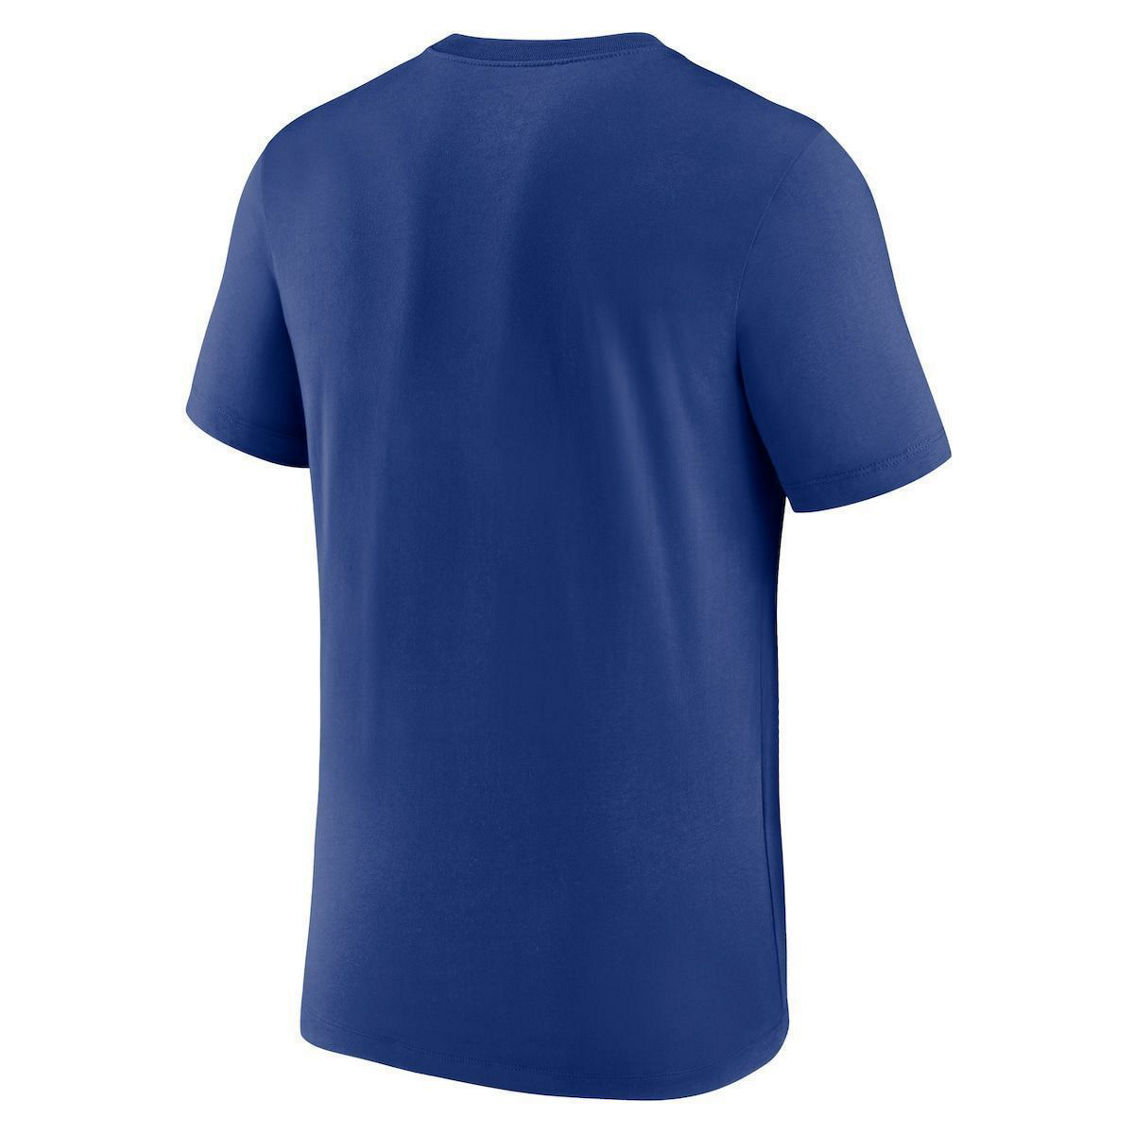 Men's Nike Blue Chelsea Swoosh T-Shirt - Image 4 of 4